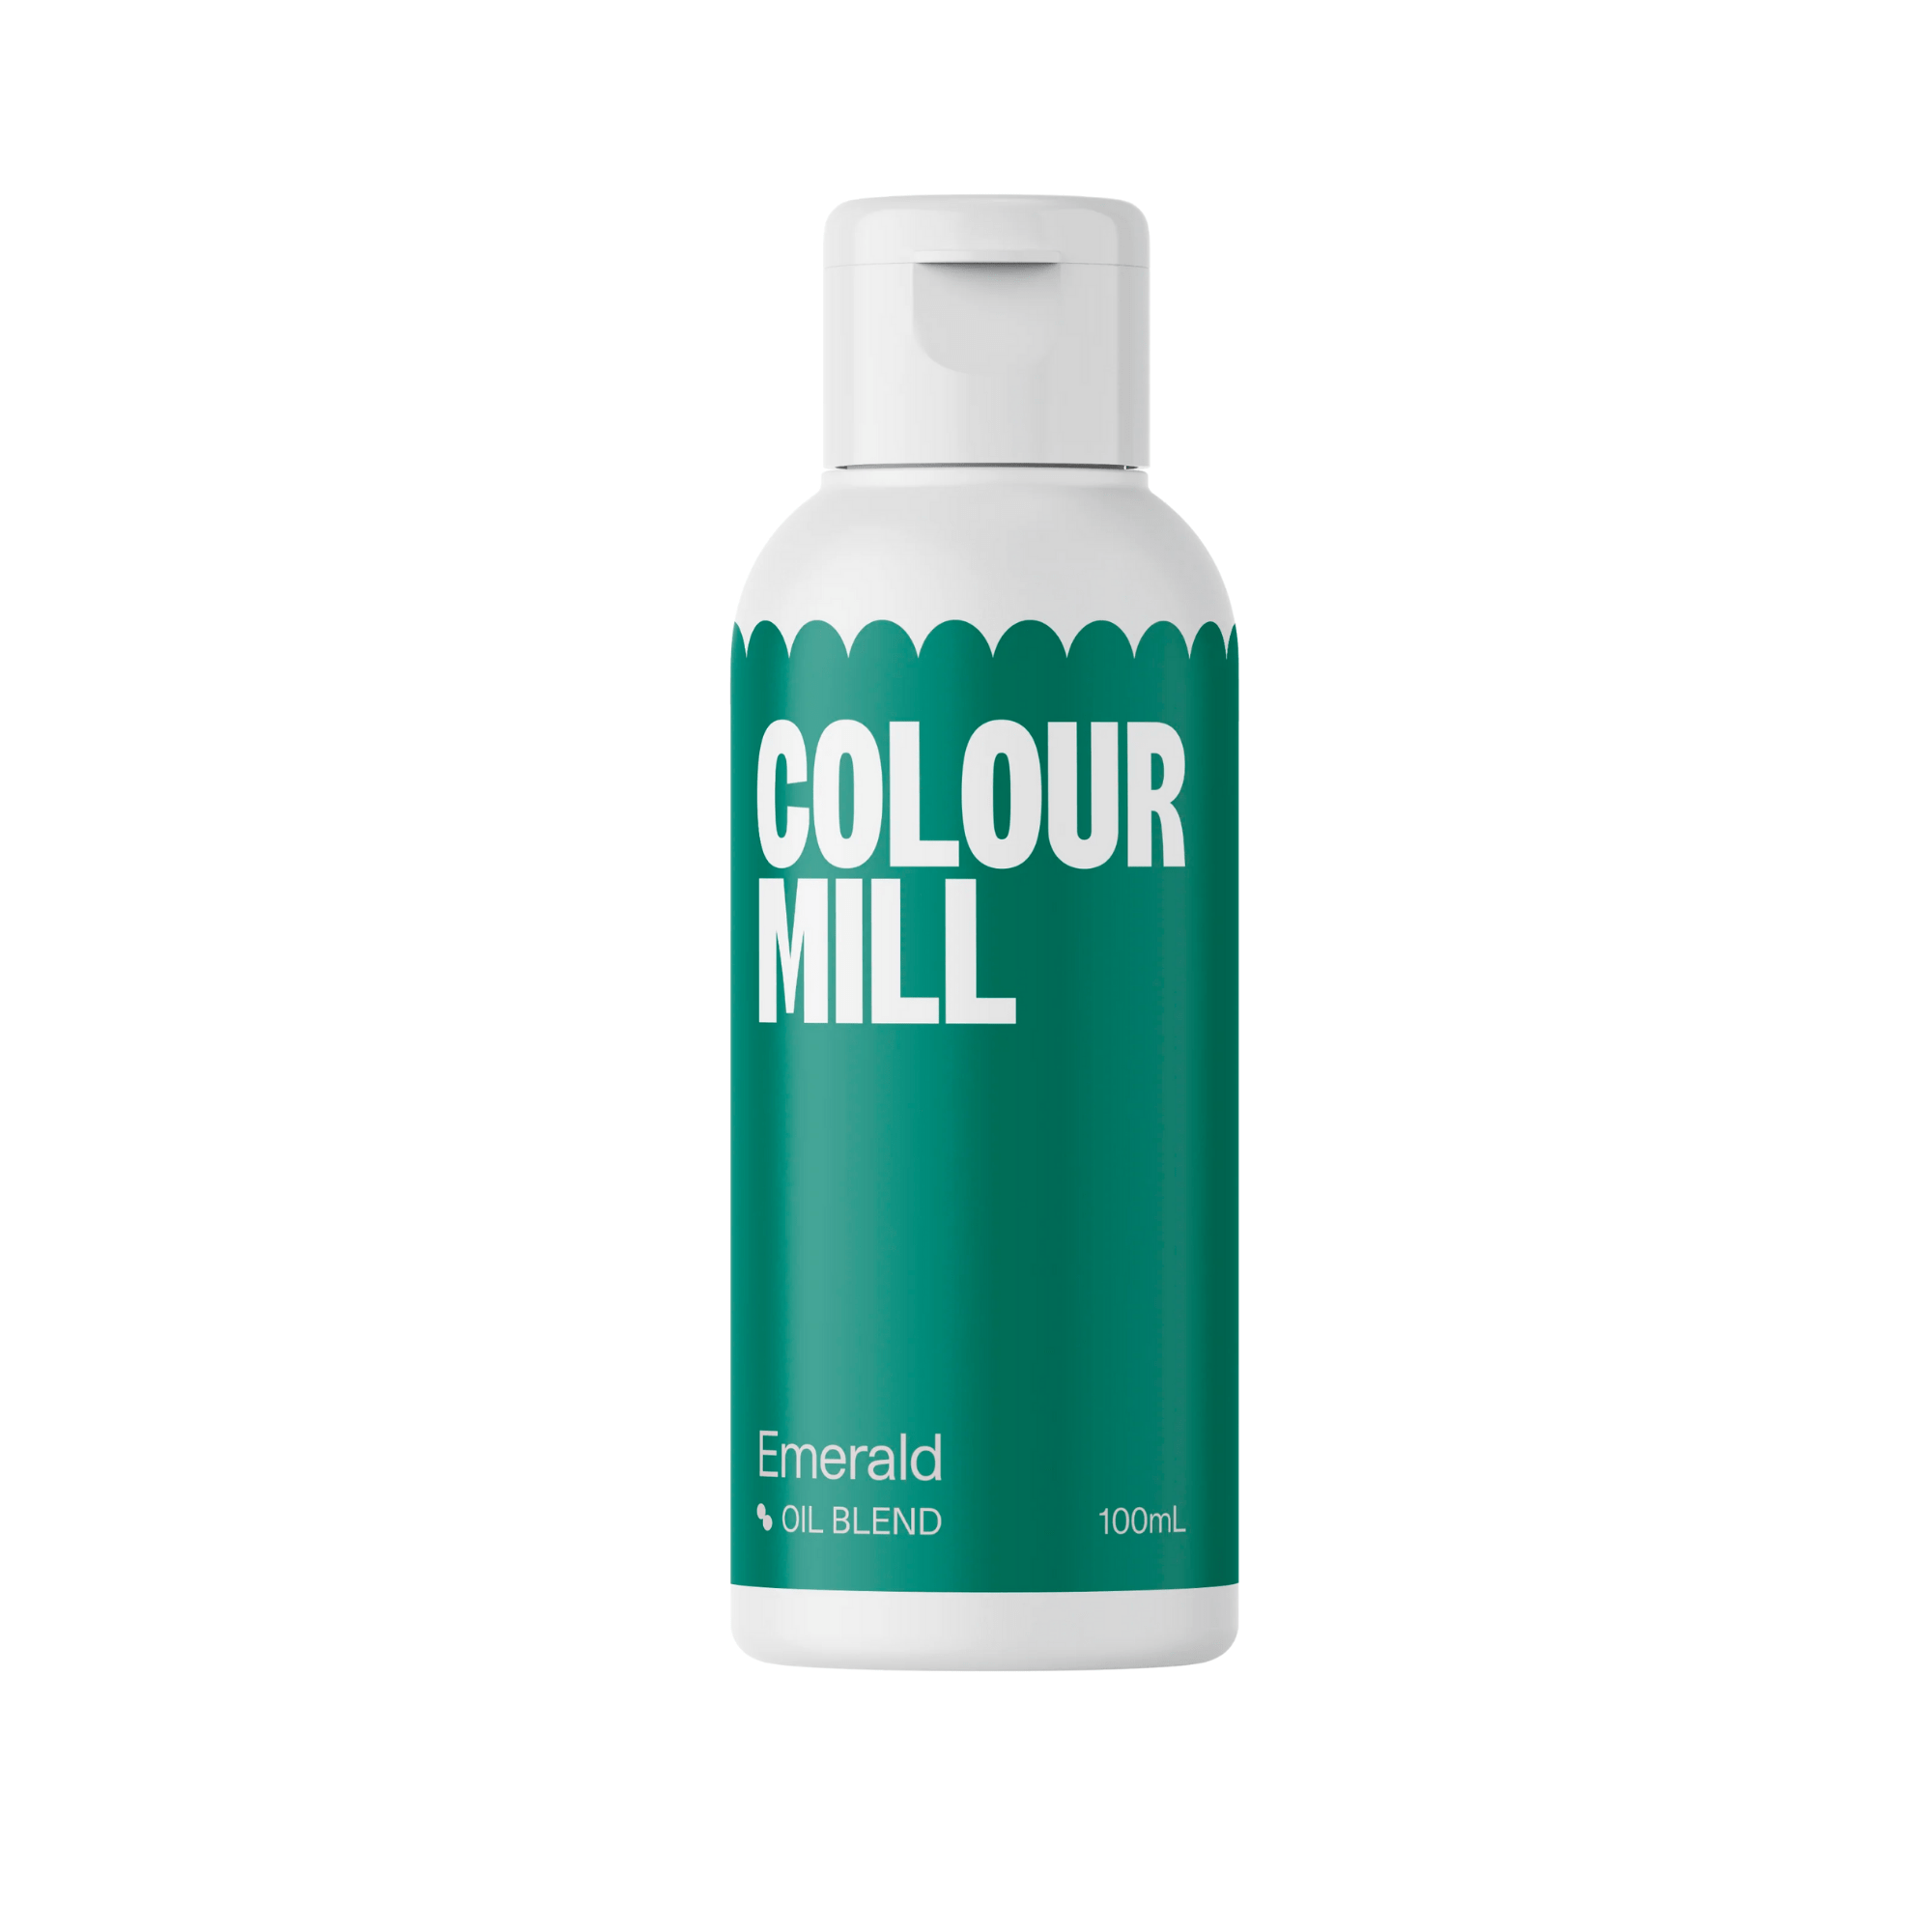 Happy Sprinkles Streusel 100ml Colour Mill Emerald - Oil Blend